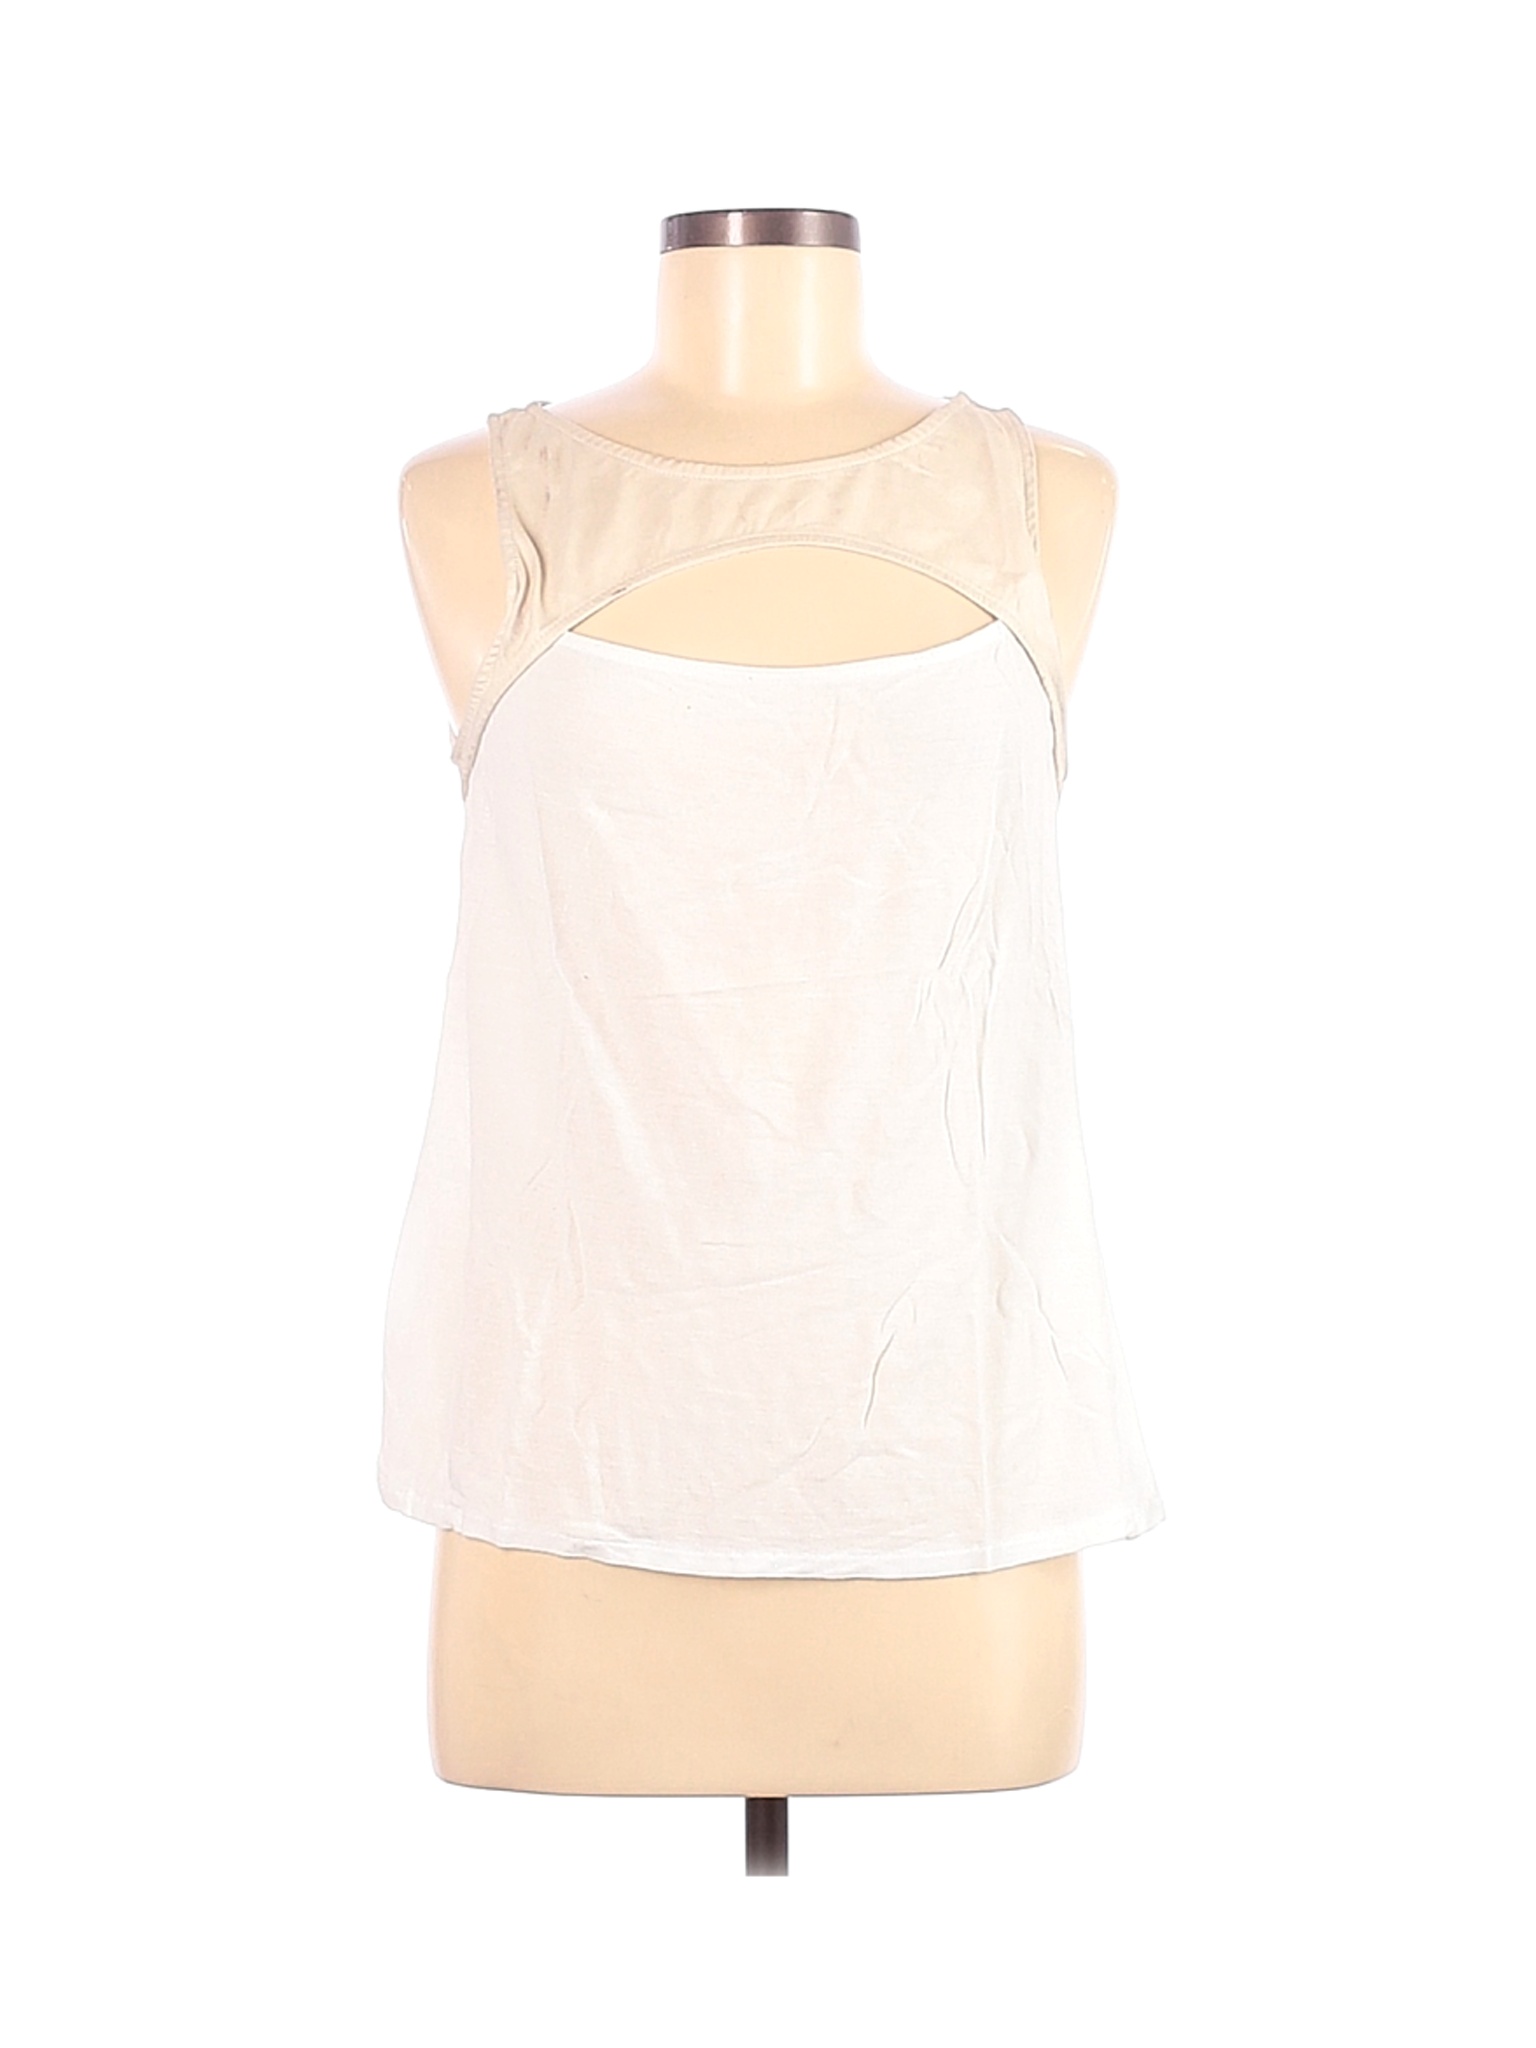 Trafaluc by Zara Women White Sleeveless Top M | eBay